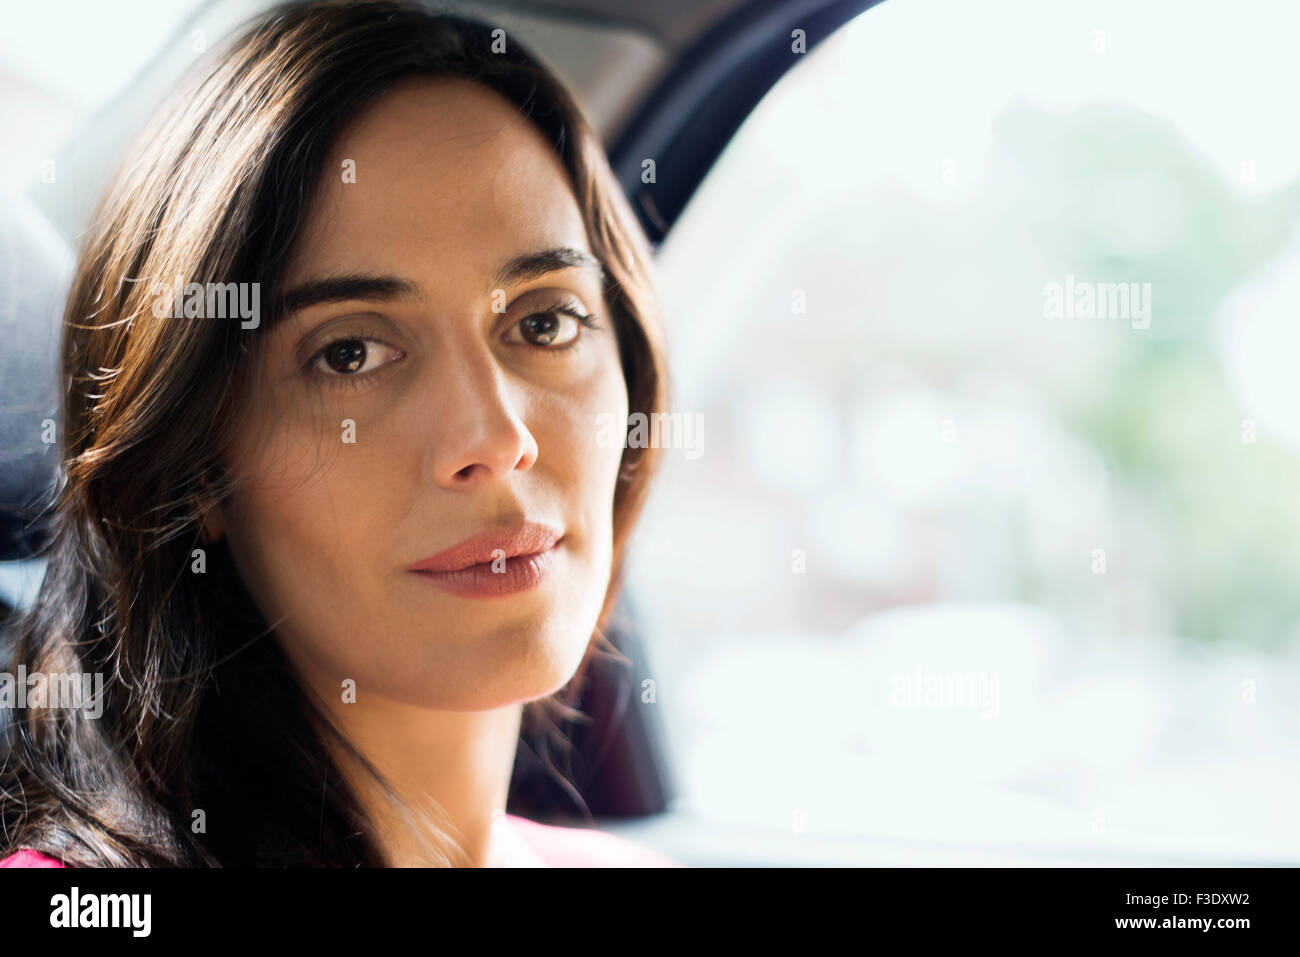 Woman in car, portrait Stock Photo